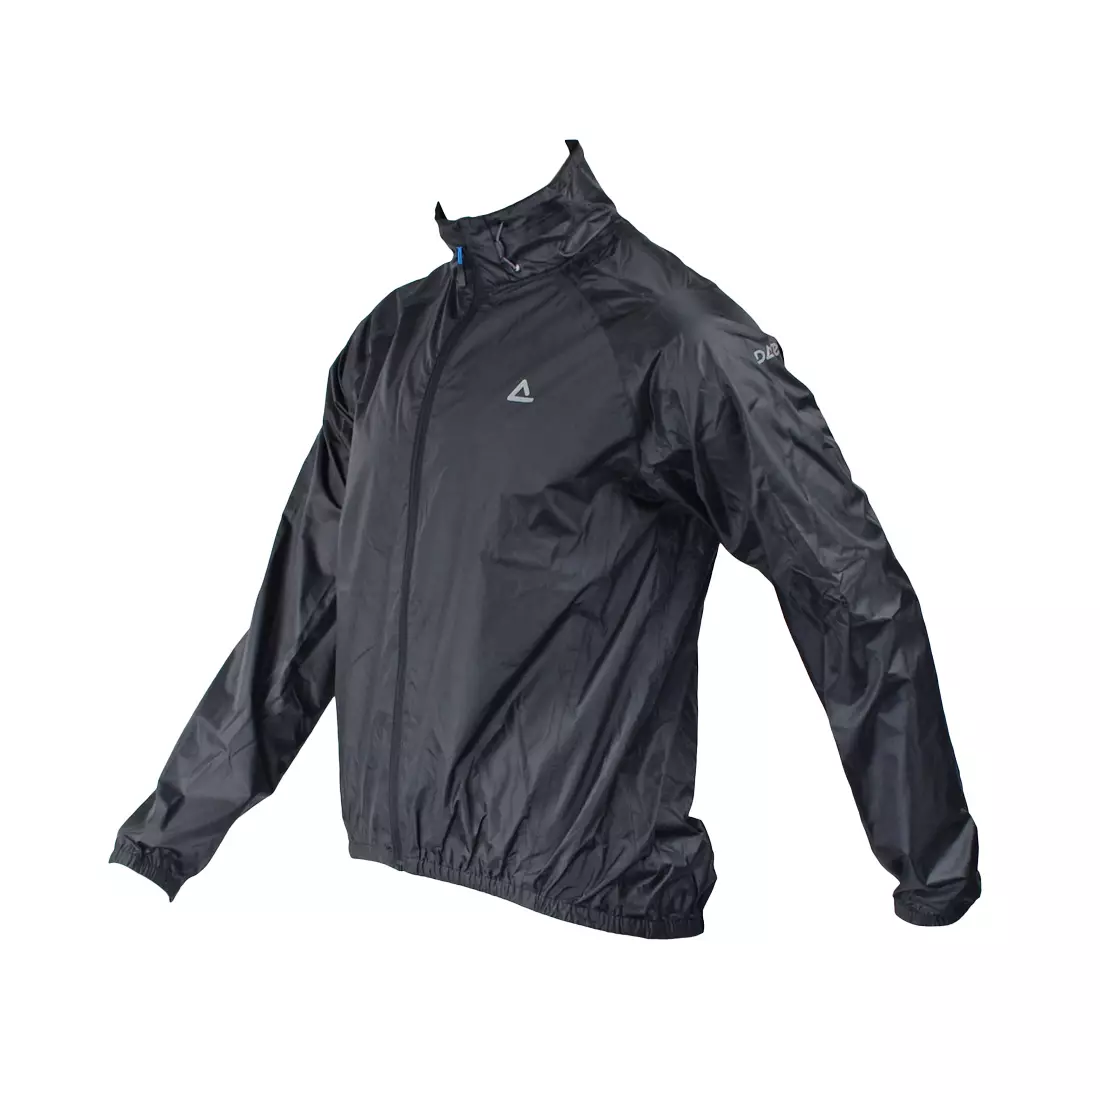 DARE 2B - AQ-LITE JACKET DMW063 - ultralight cycling jacket, color: Black